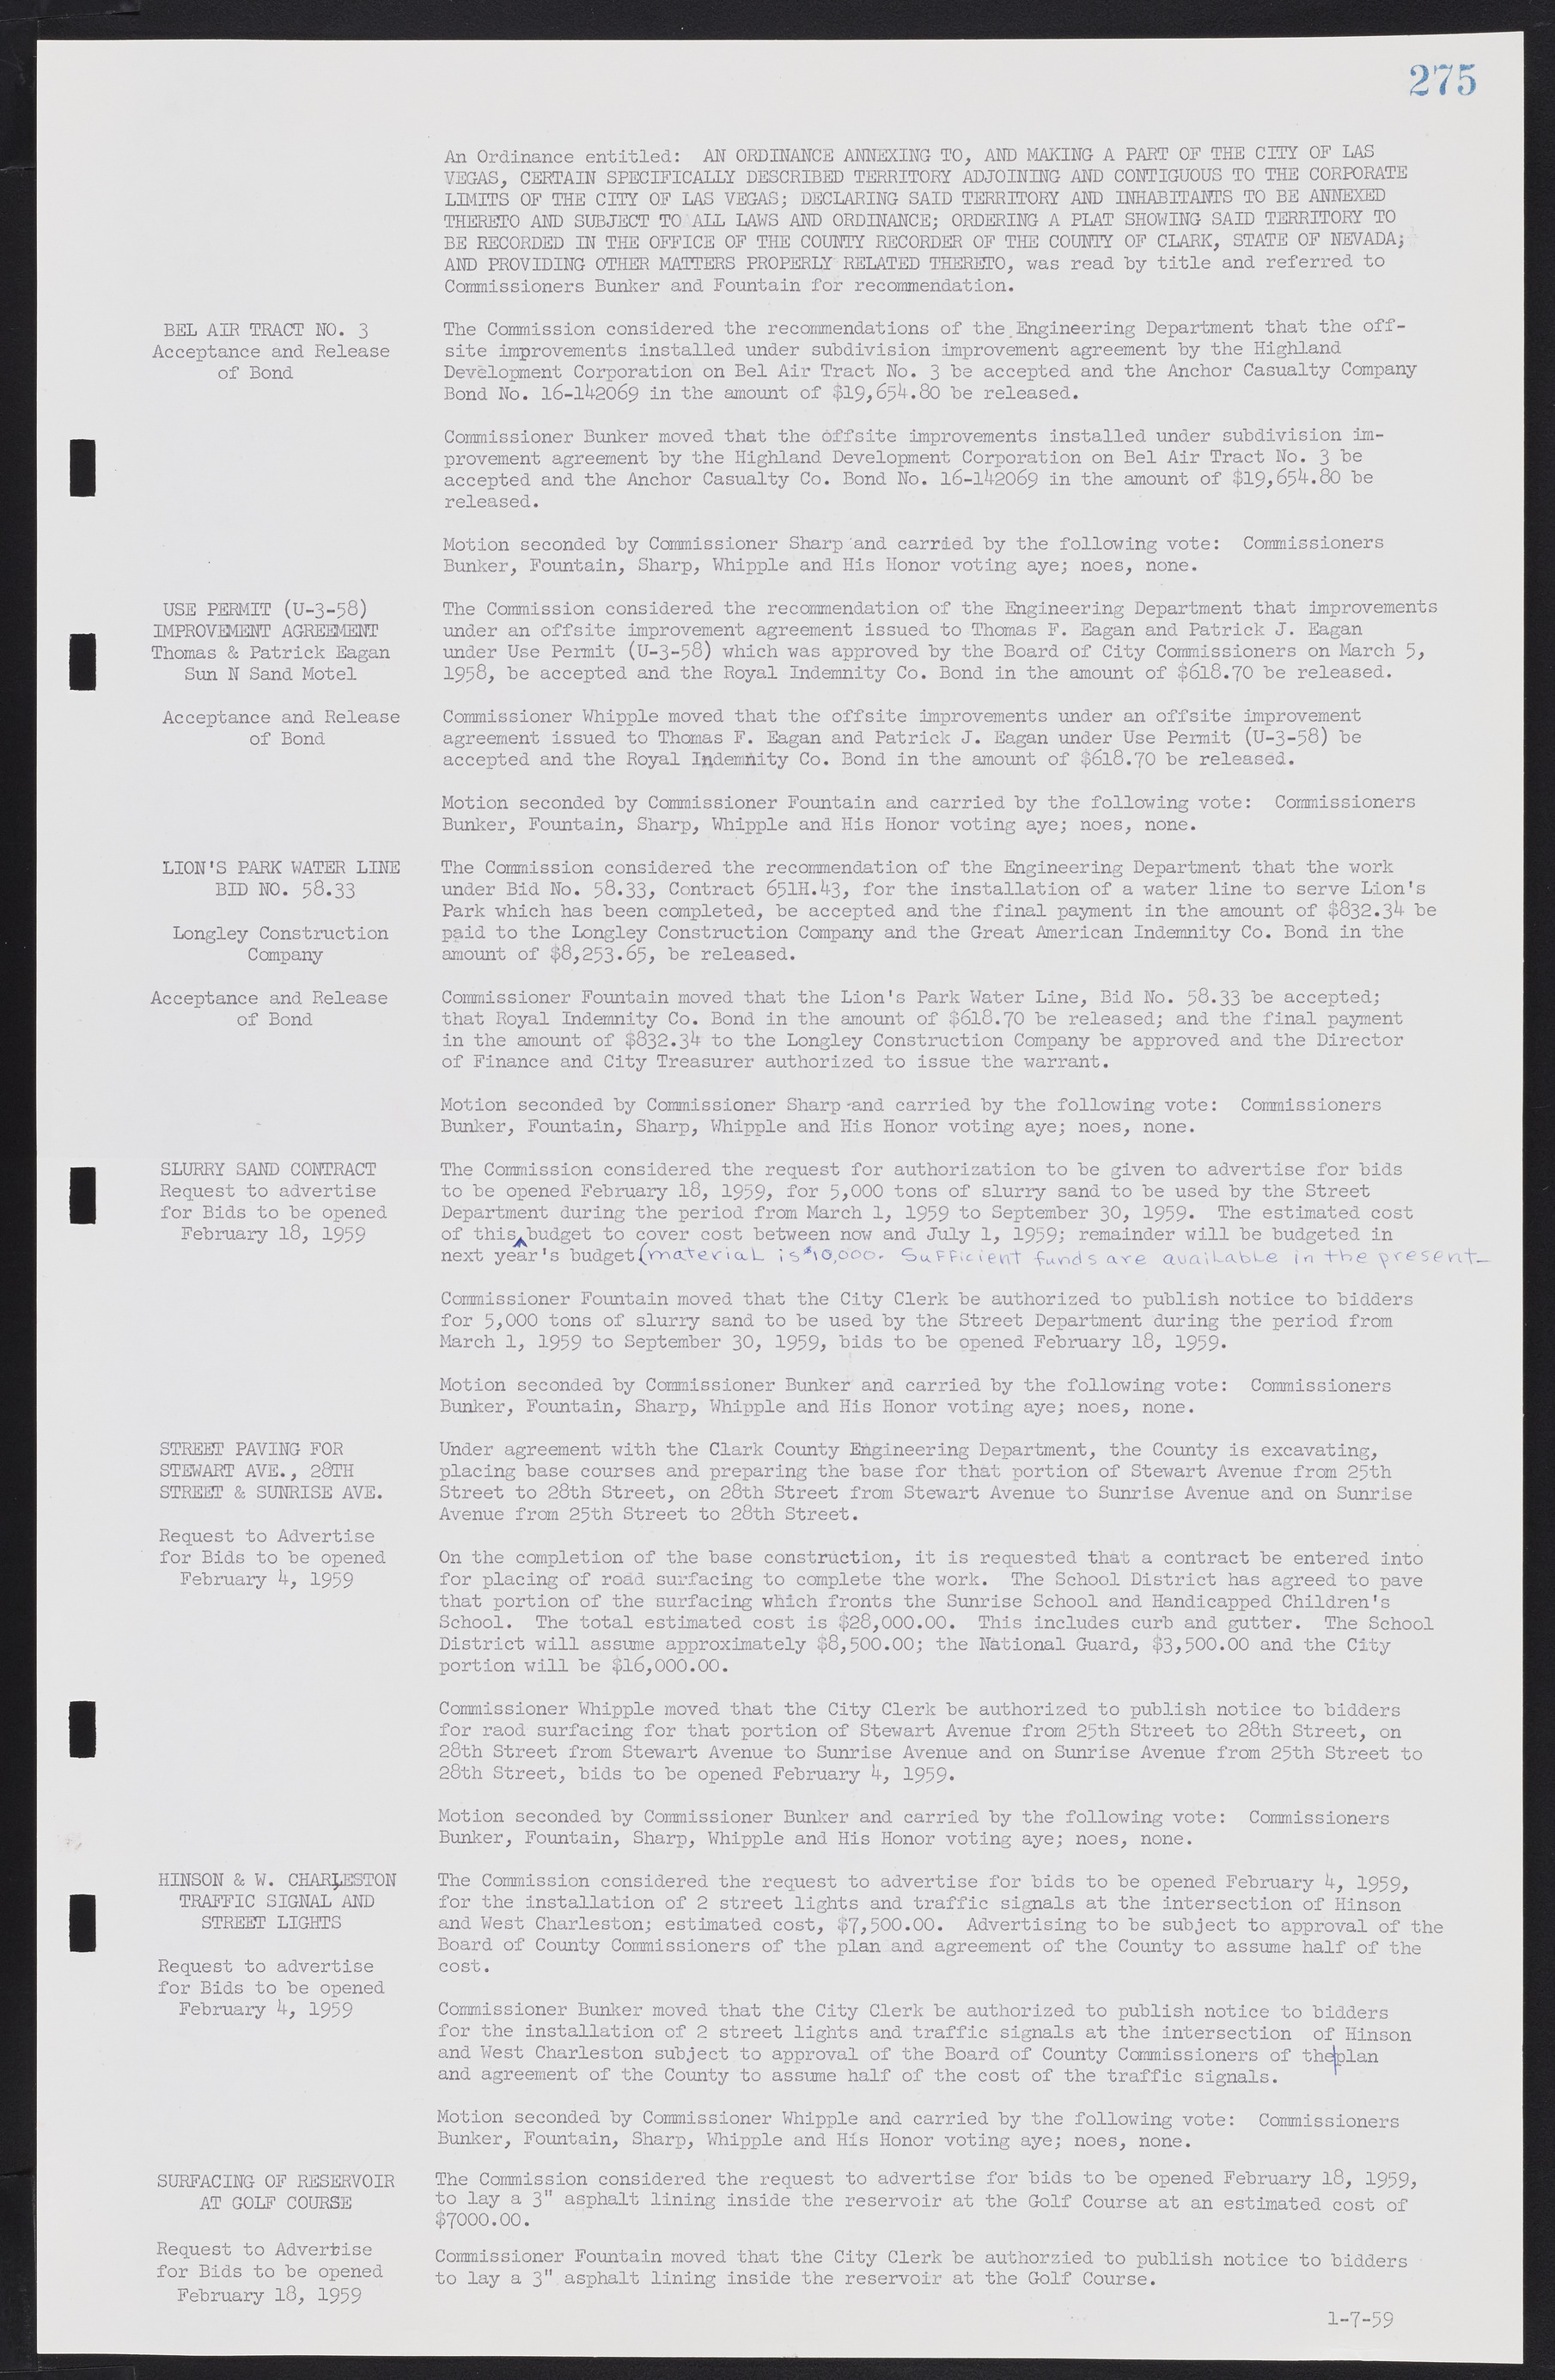 Las Vegas City Commission Minutes, November 20, 1957 to December 2, 1959, lvc000011-283